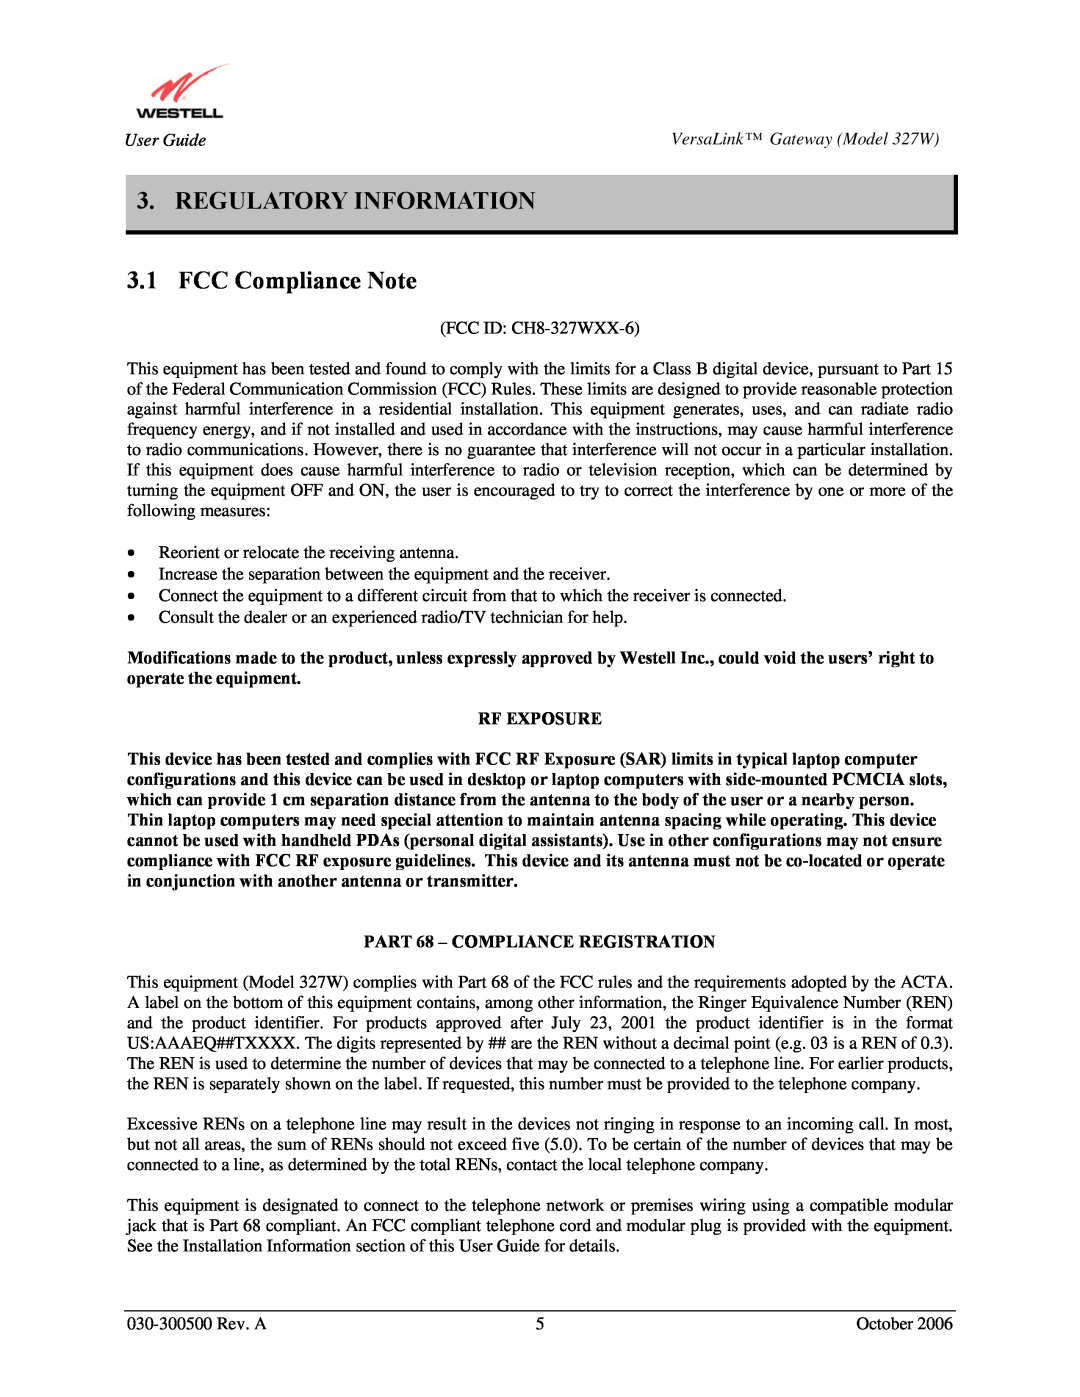 Westell Technologies 327W REGULATORY INFORMATION 3.1 FCC Compliance Note, Rf Exposure, PART 68 - COMPLIANCE REGISTRATION 